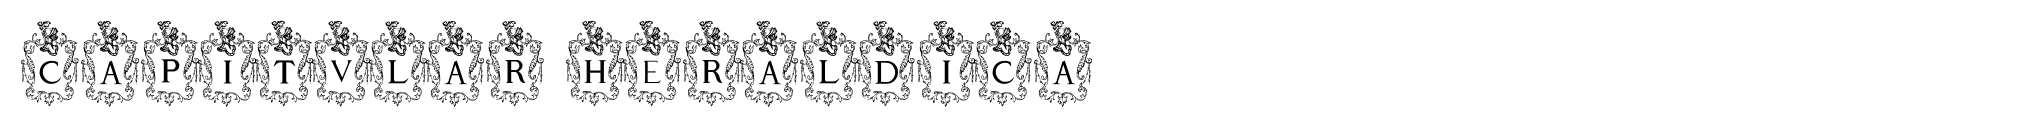 Capitular Heraldica image